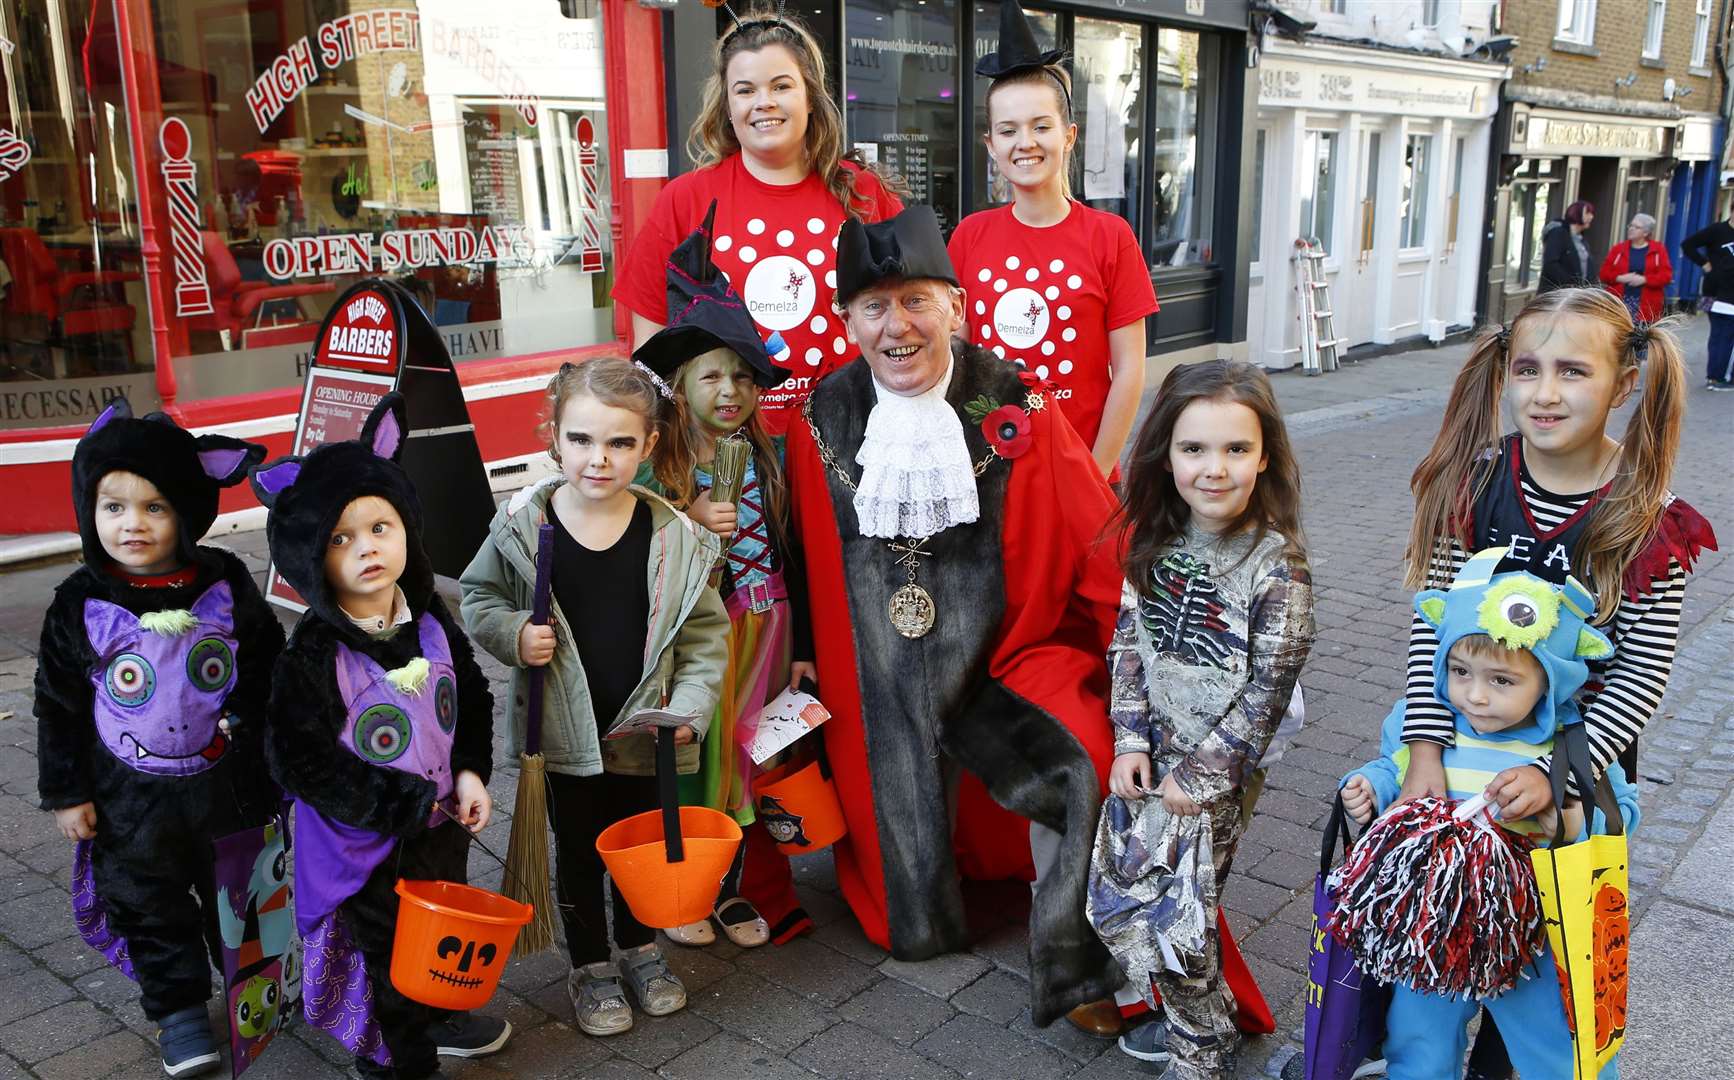 Children at last year's event in Gravesend